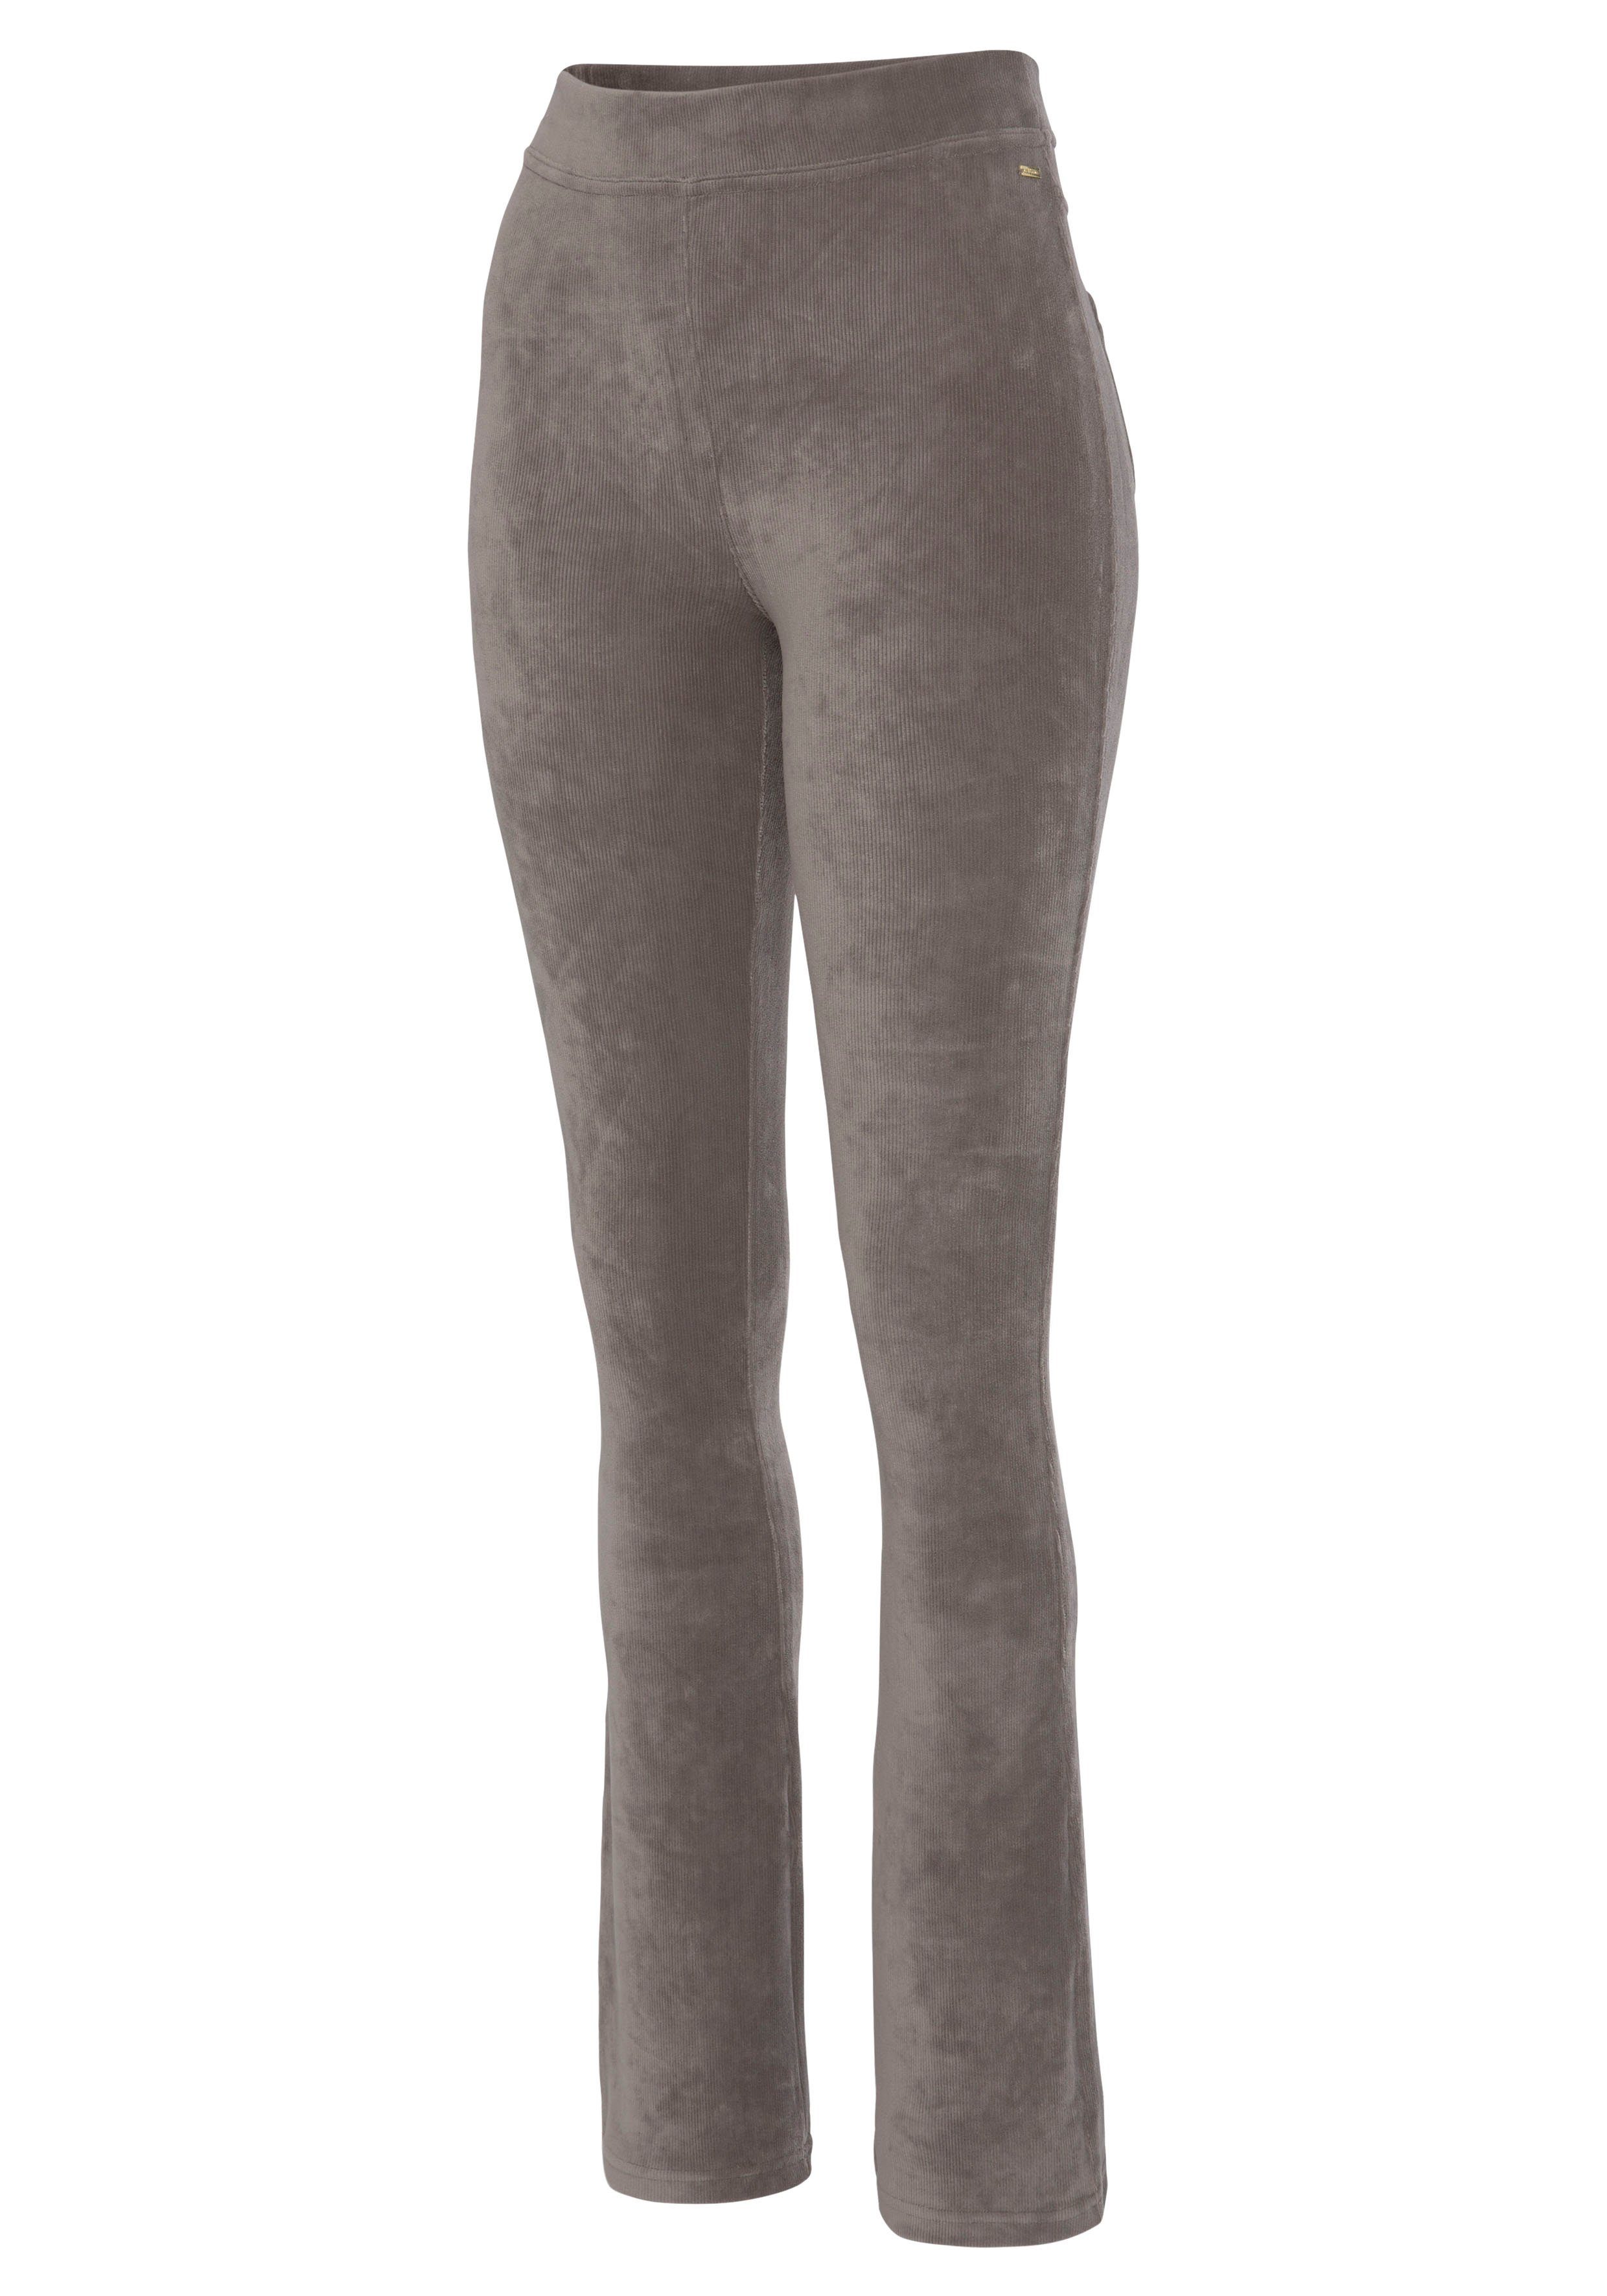 LASCANA Jazzpants stone weichem aus Material in Cord-Optik, Loungewear